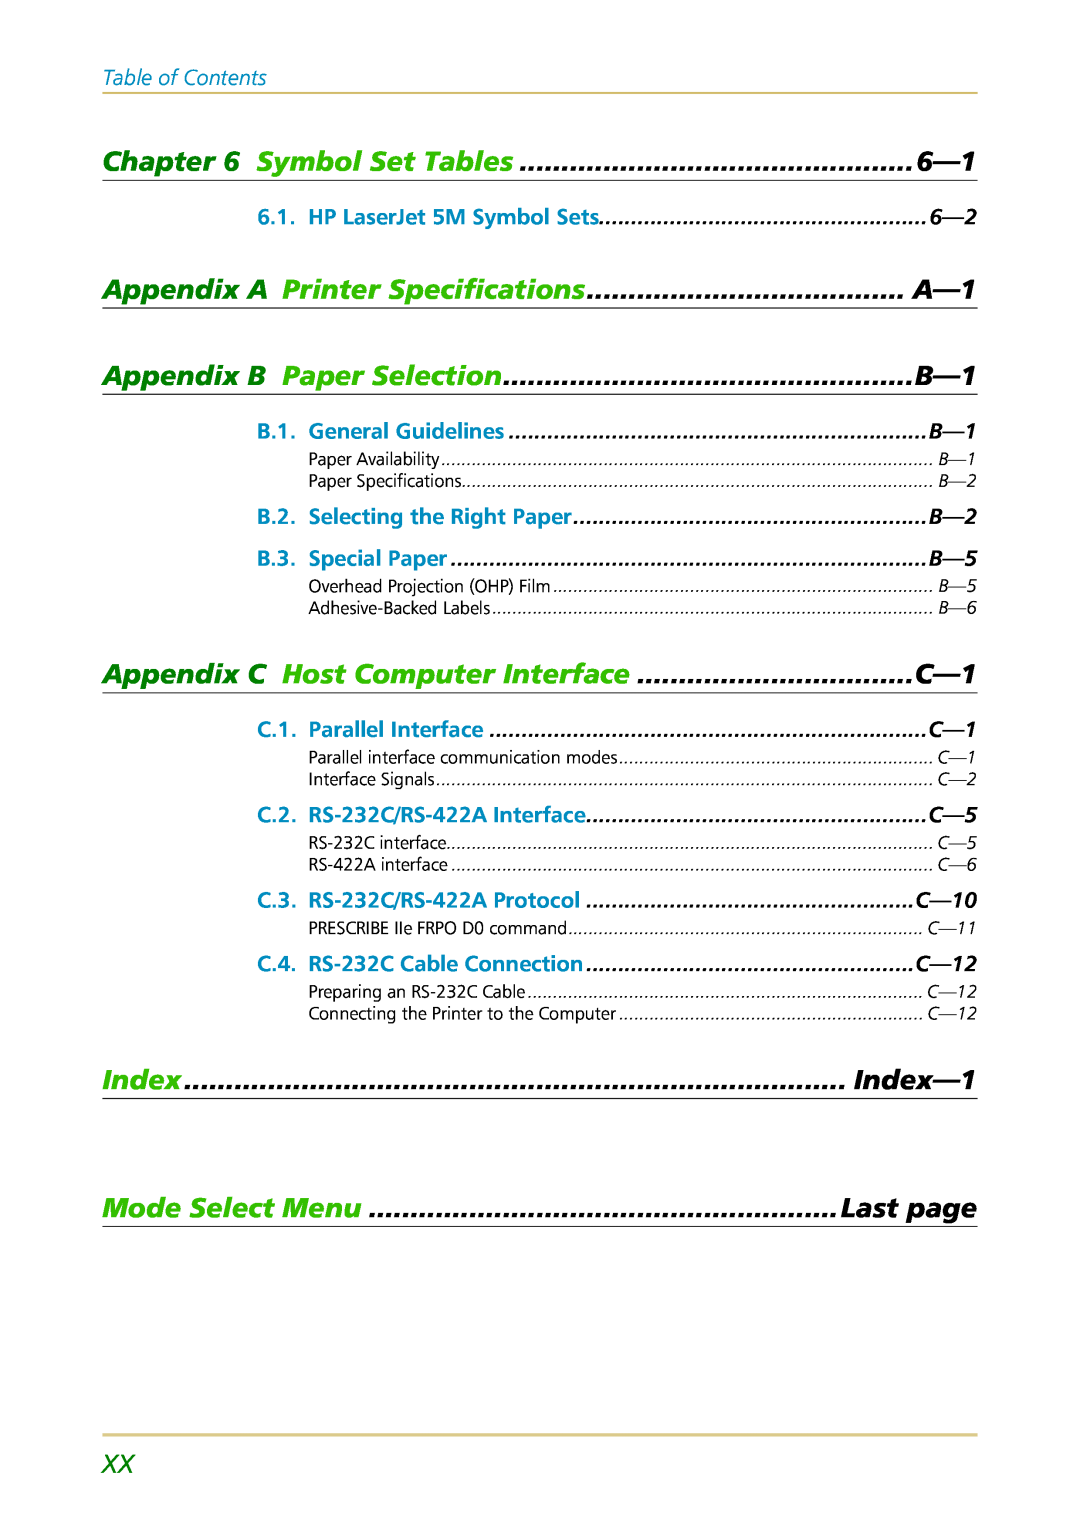 Kyocera FS-1700 Appendix A Printer Specifications, Appendix C Host Computer Interface, Index—1, Mode Select Menu 